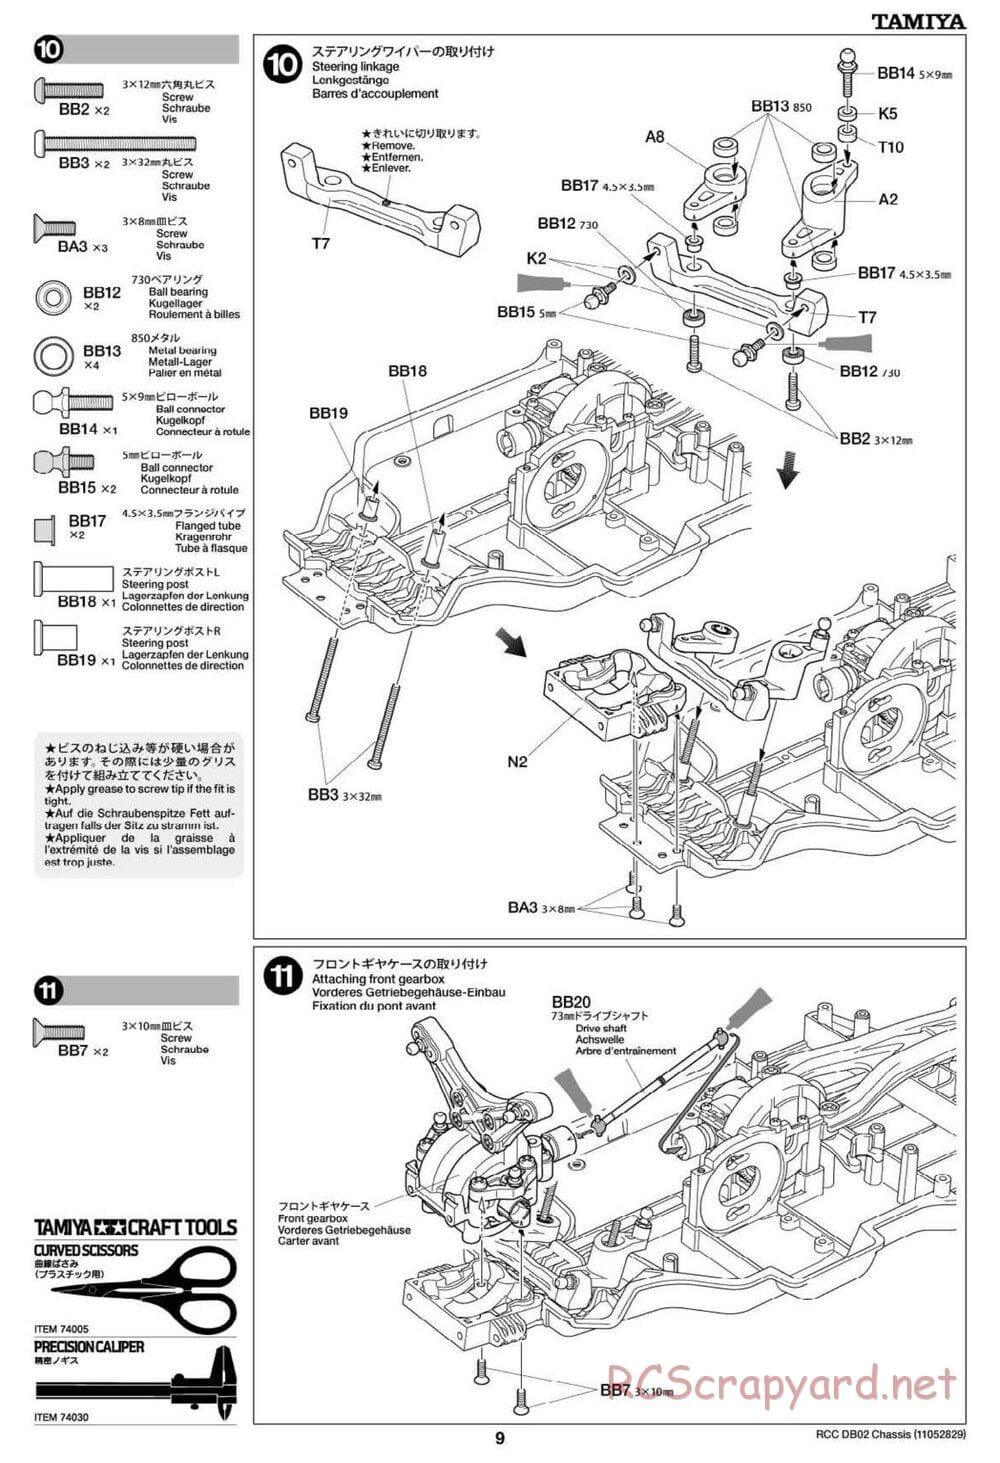 Tamiya - Leonis - DB-02 Chassis - Manual - Page 9